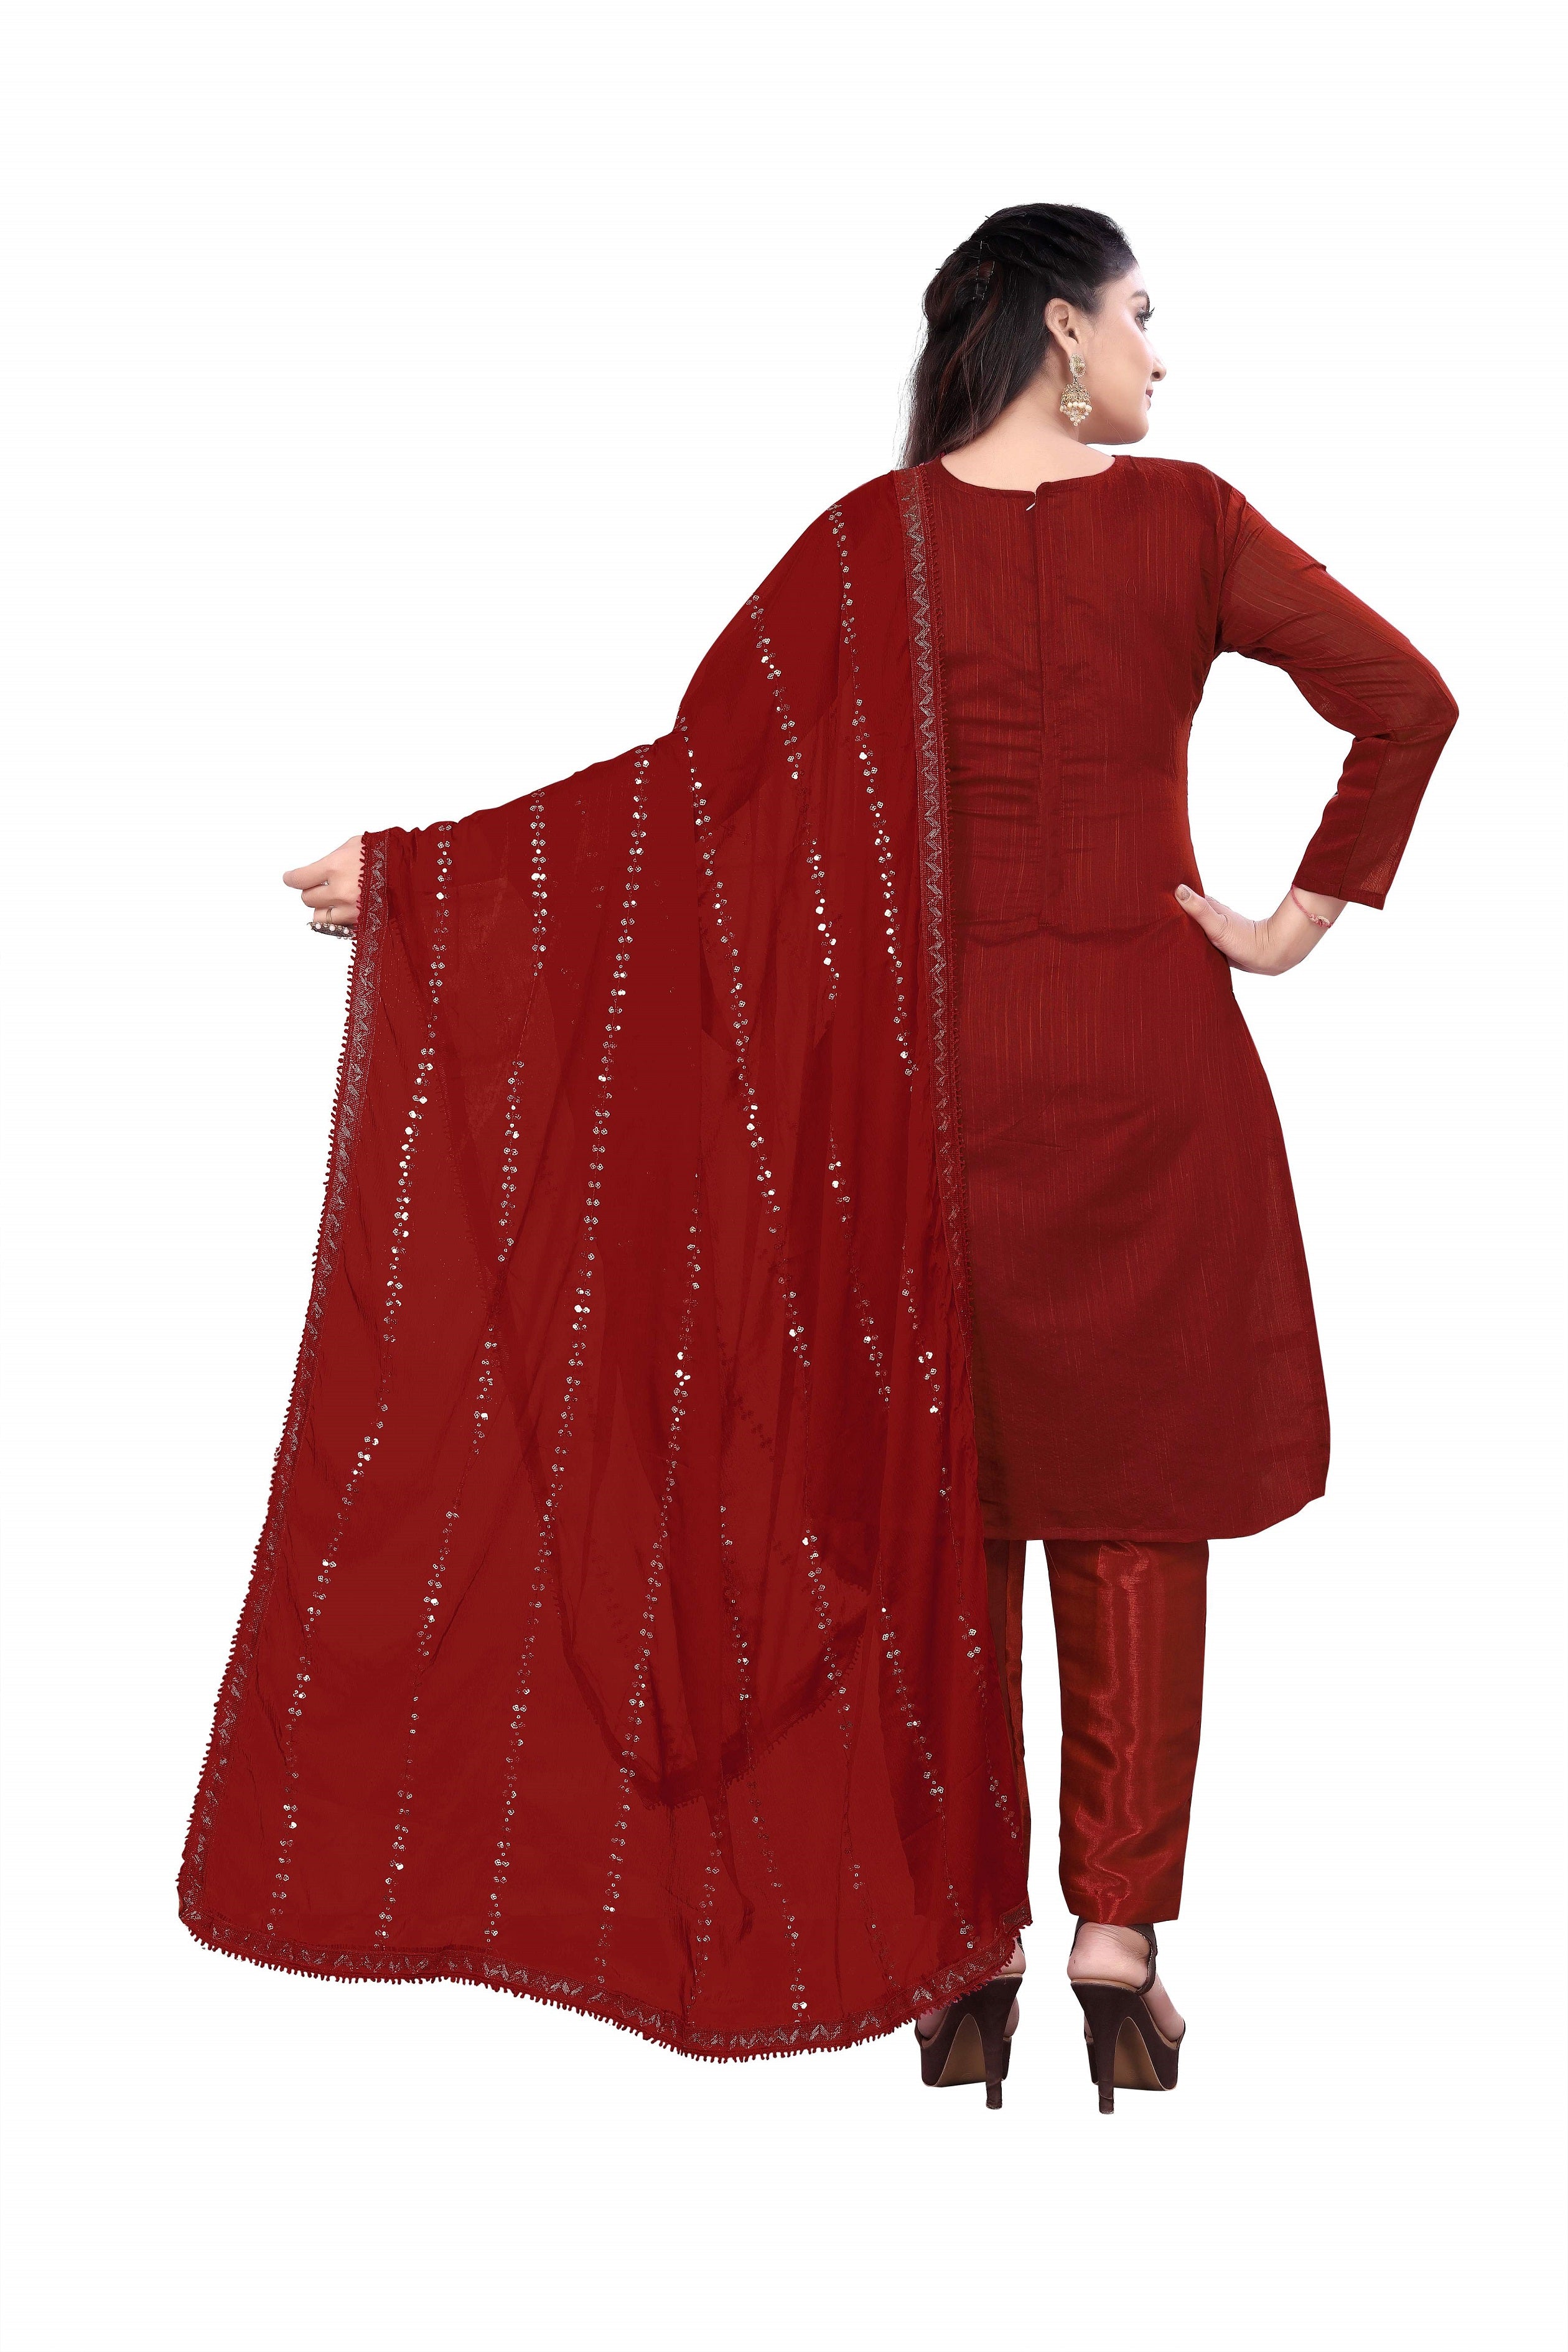 Women's Red Colour Semi-Stitched Suit Sets - Dwija Fashion